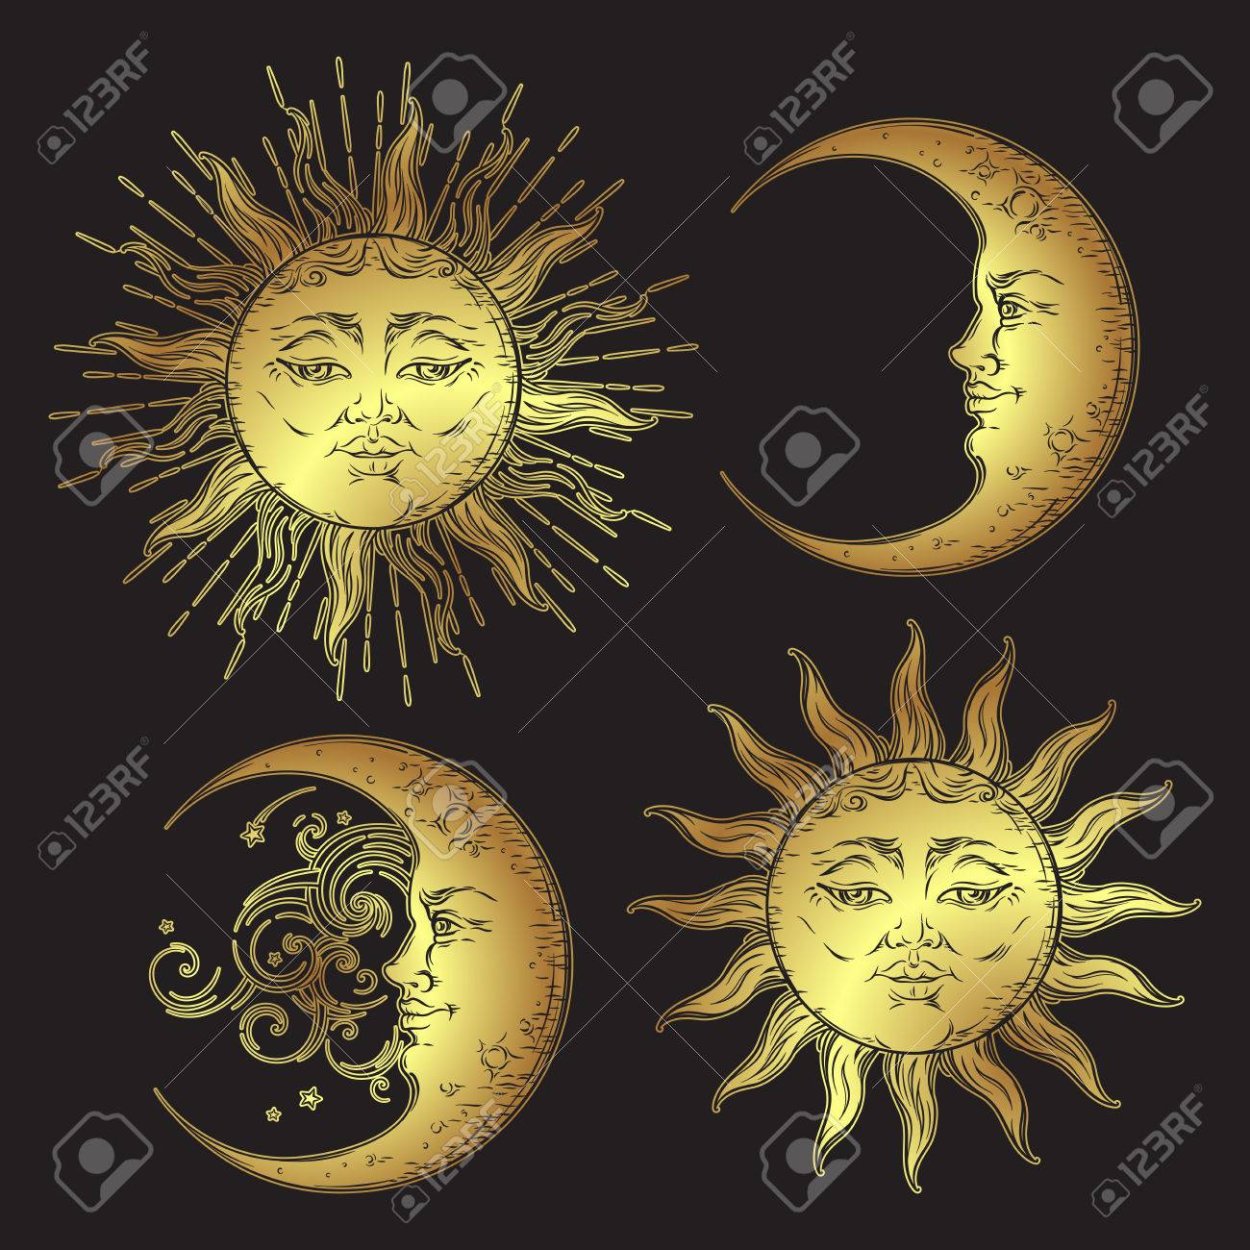 Карта солнца и луны. Солнце и Луна. Славянское солнце итлуна. Символ солнца и Луны. Славянское солнце и Луна.